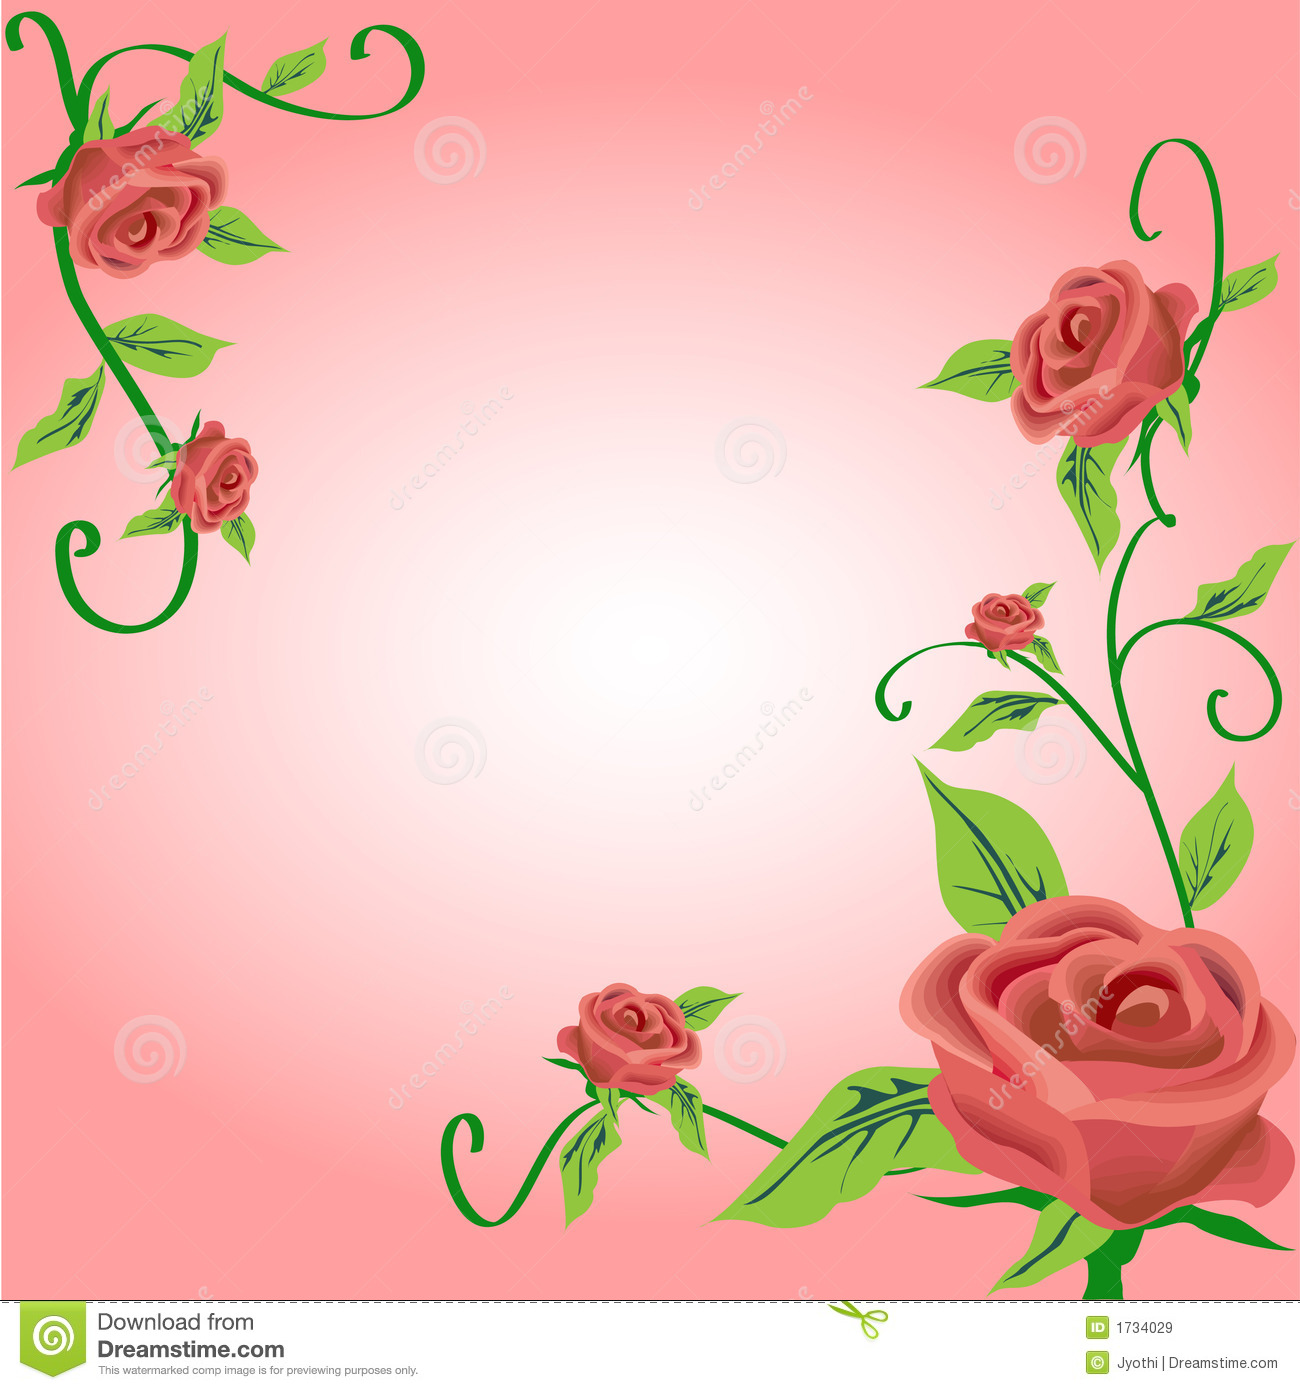 Rose Design Royalty Free Stock Images   Image  1734029